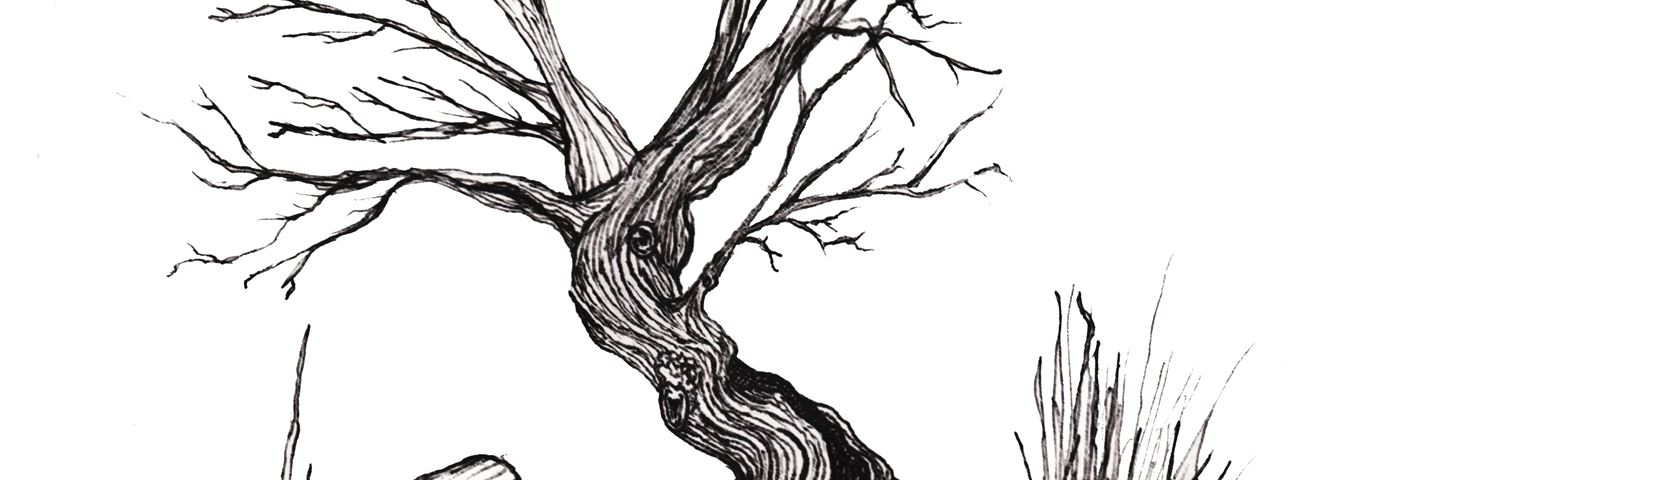 Pen & Ink Tree Drawing